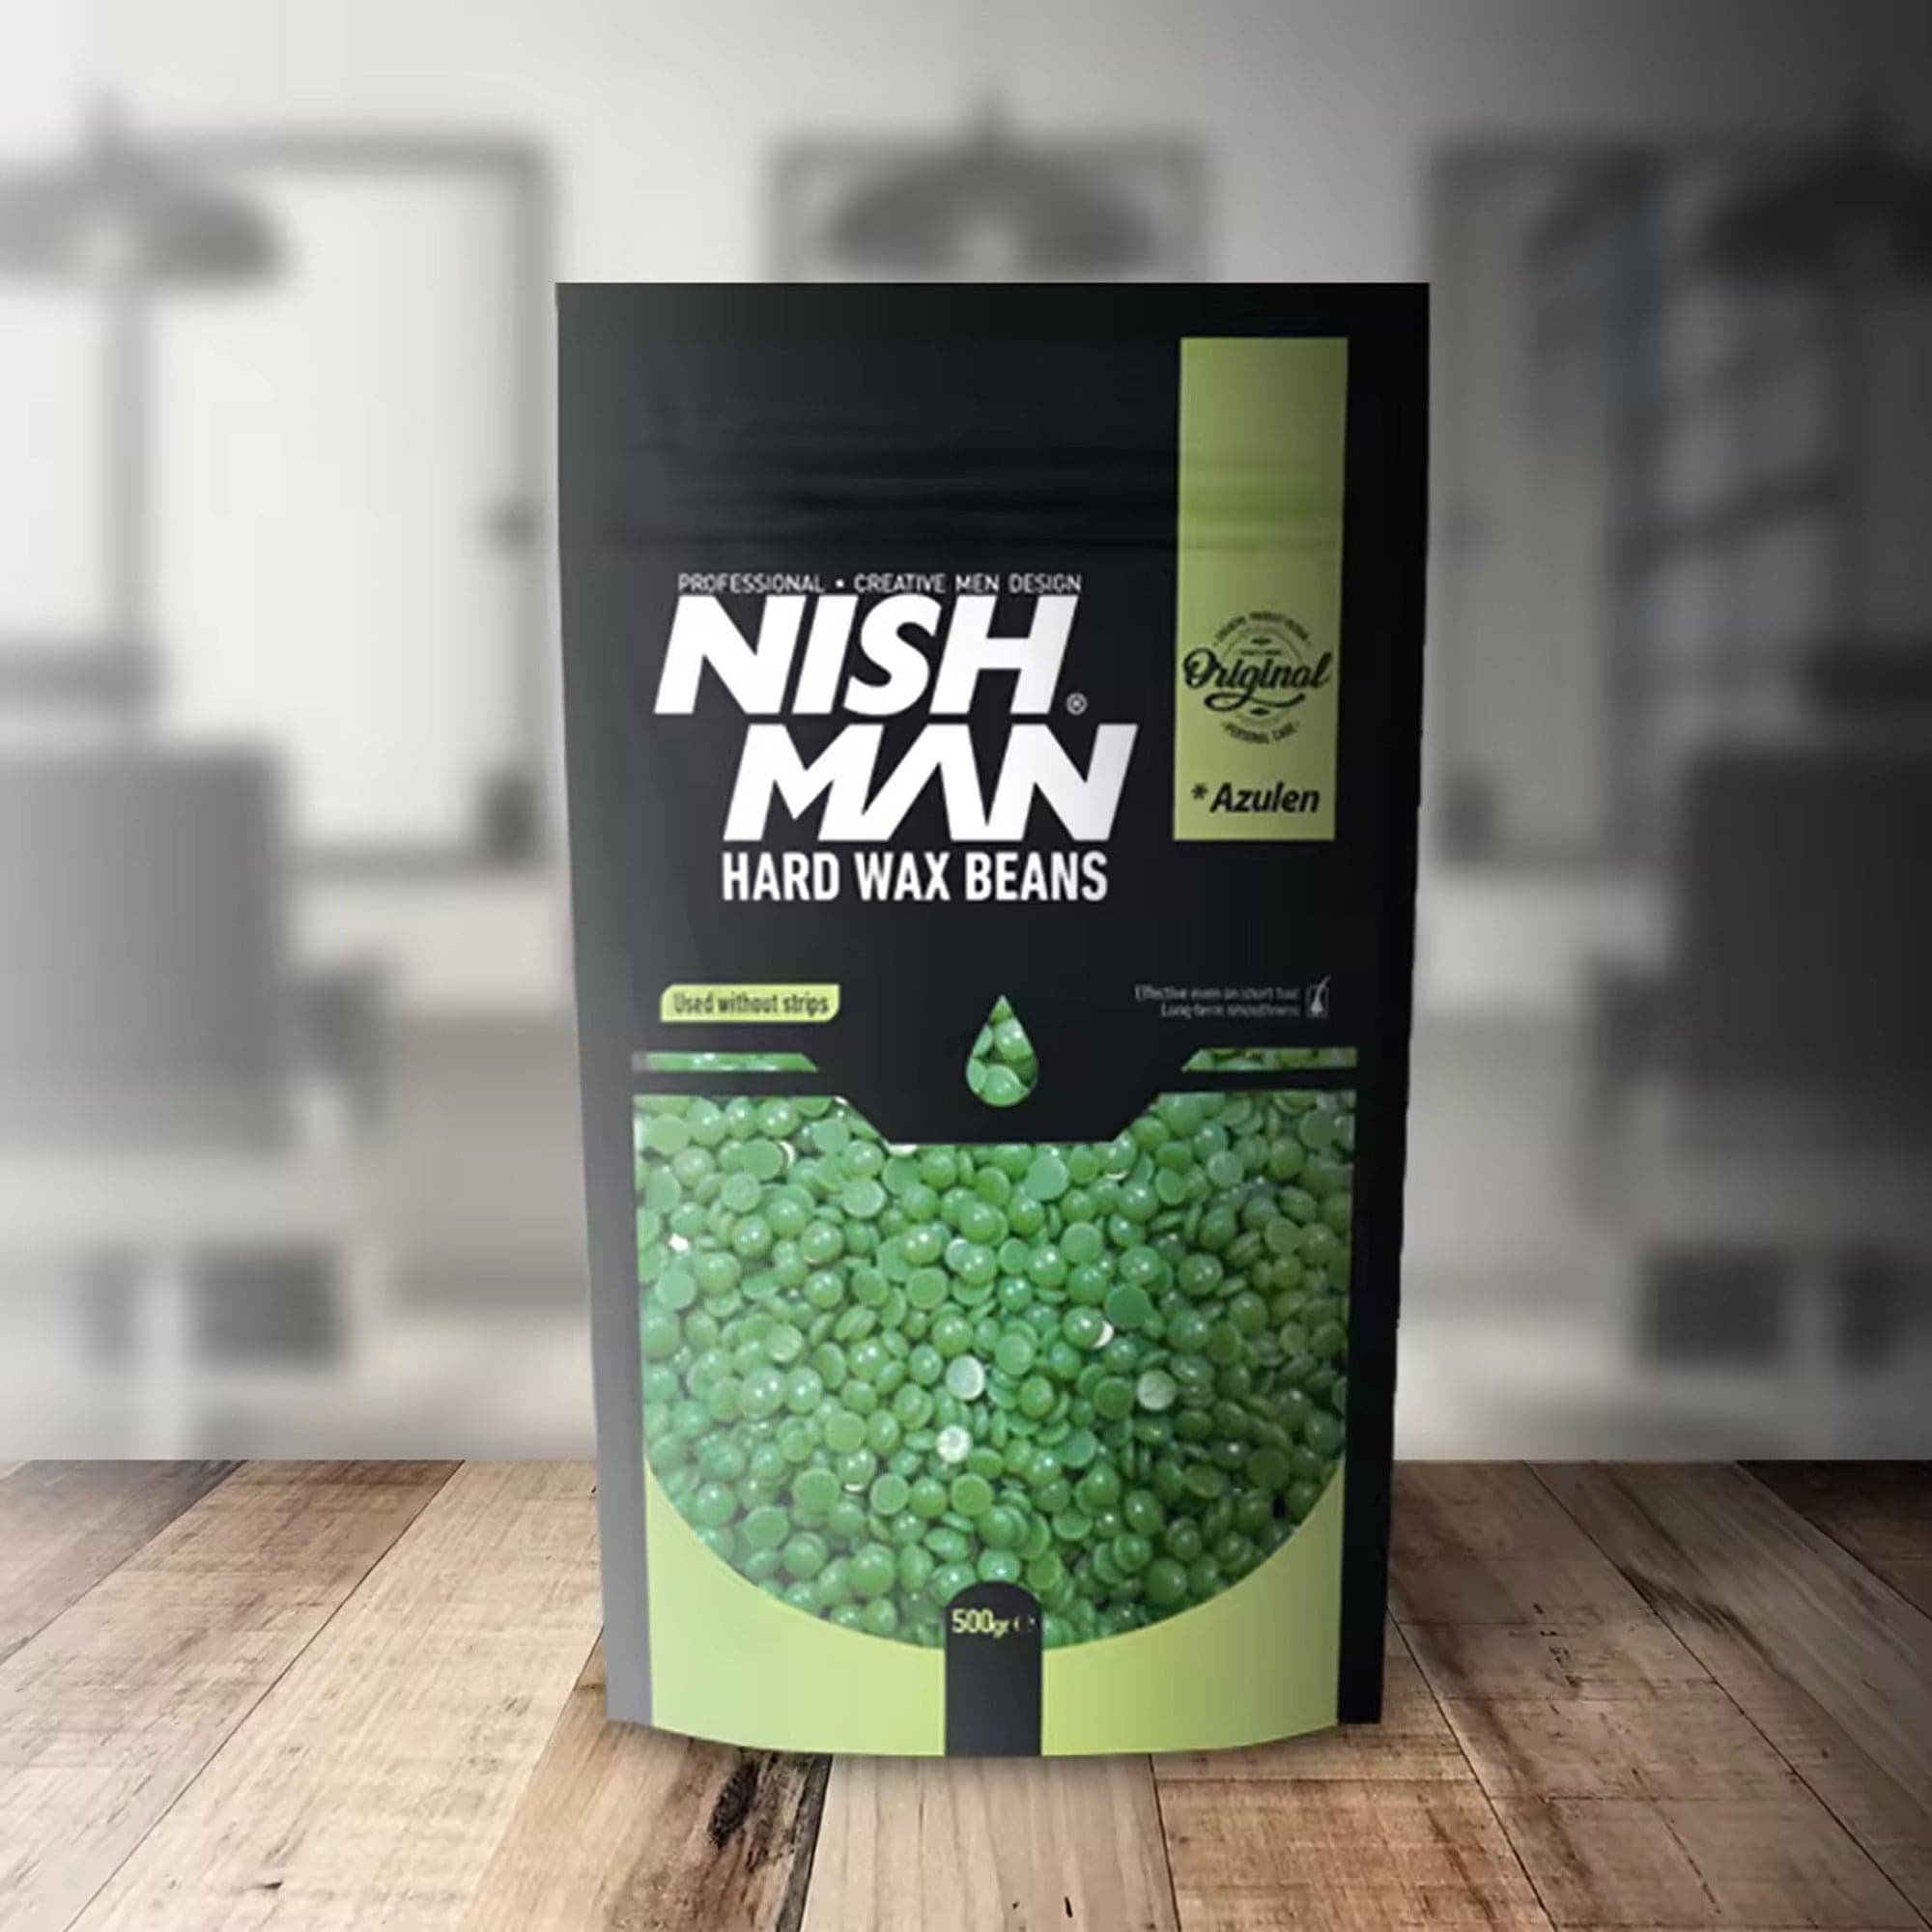 Nishman - Hard Wax Beans Azulen 500g